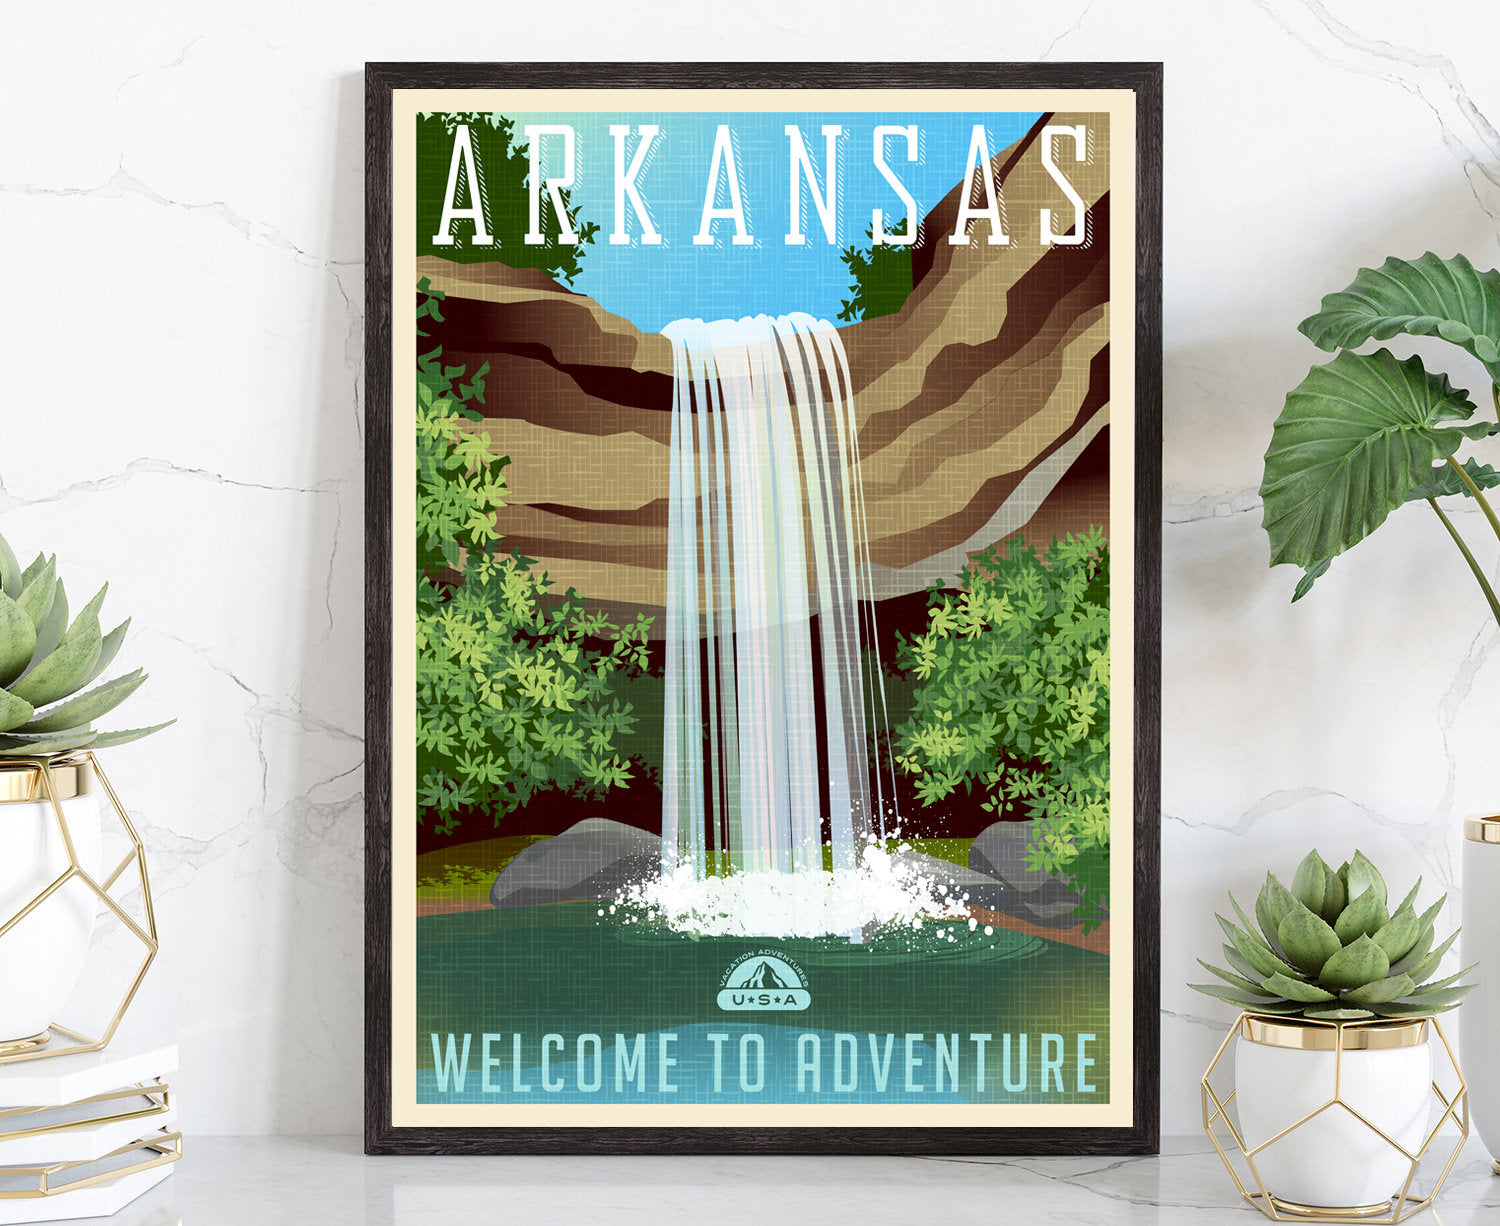 Arkansas Vintage Rustic Poster Print